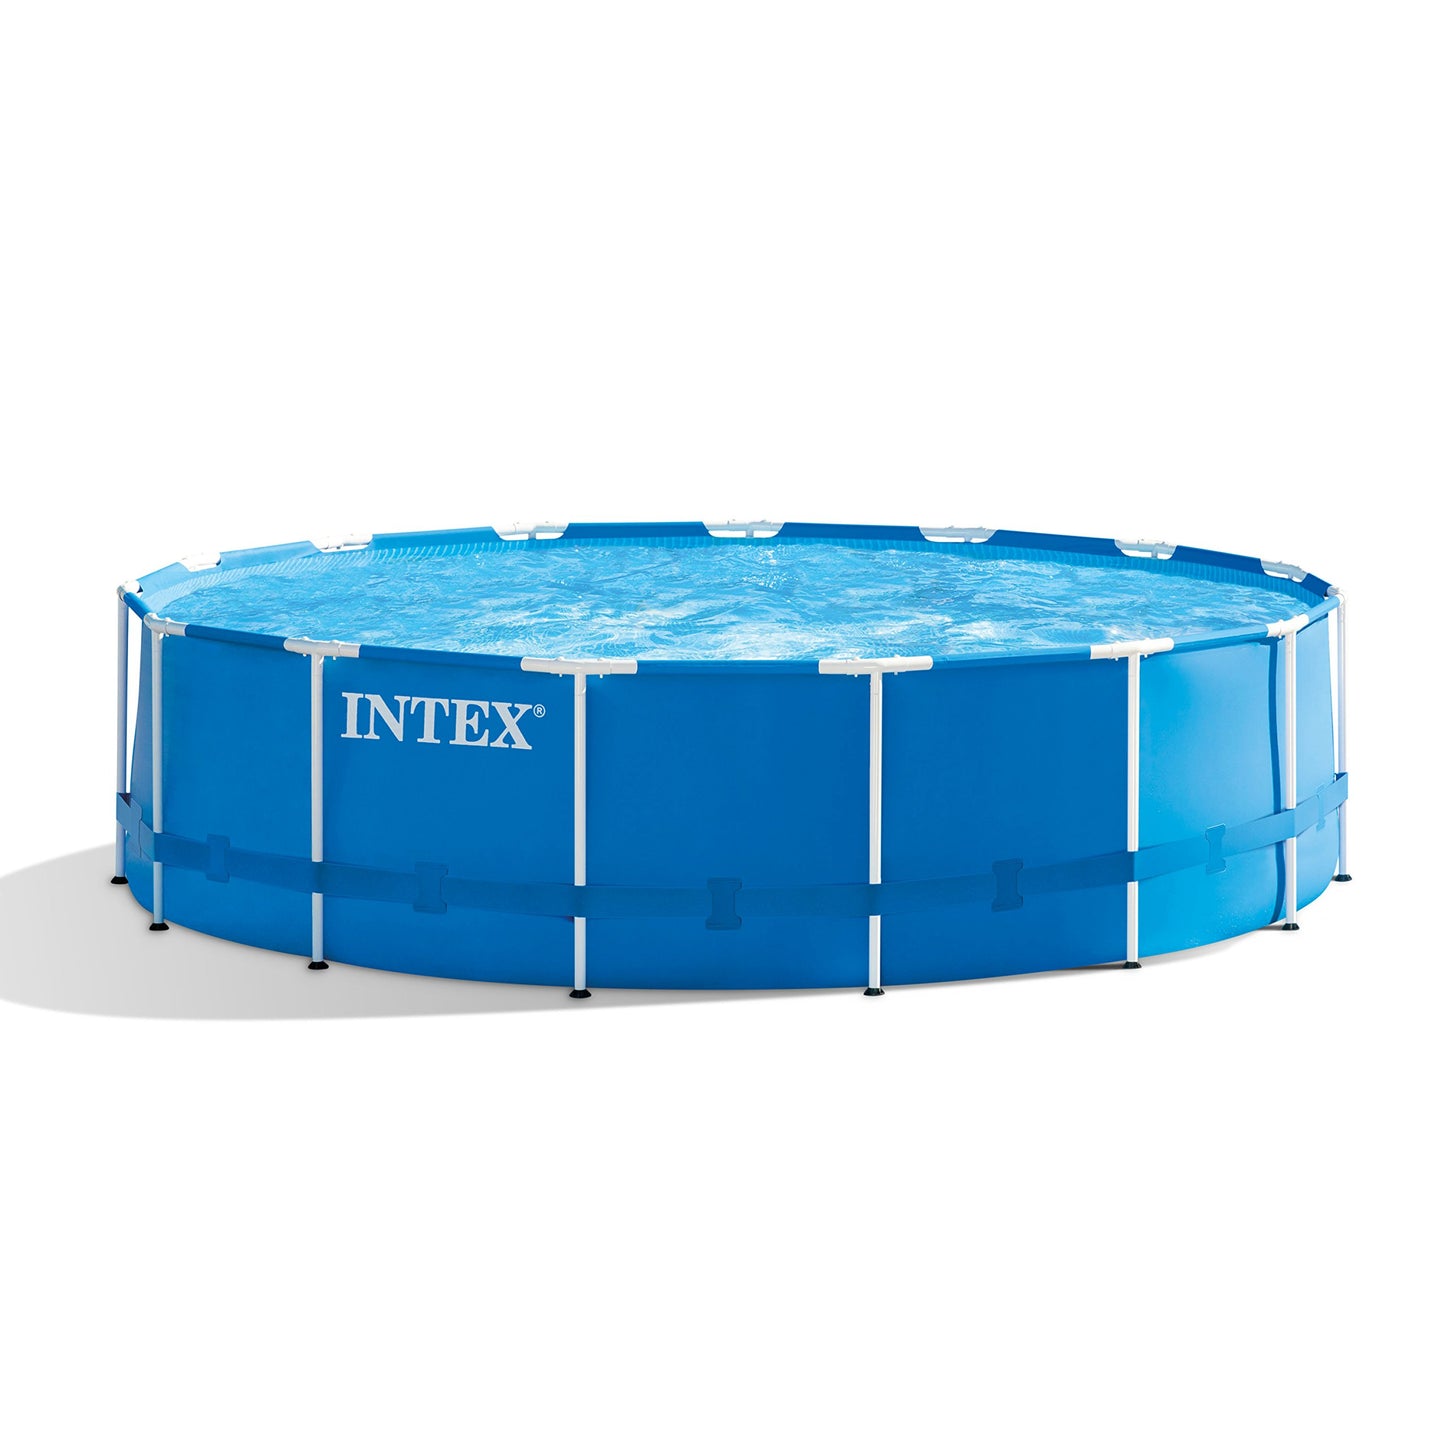 Intex 15'x48" Metal Frame Above Ground Pool Set